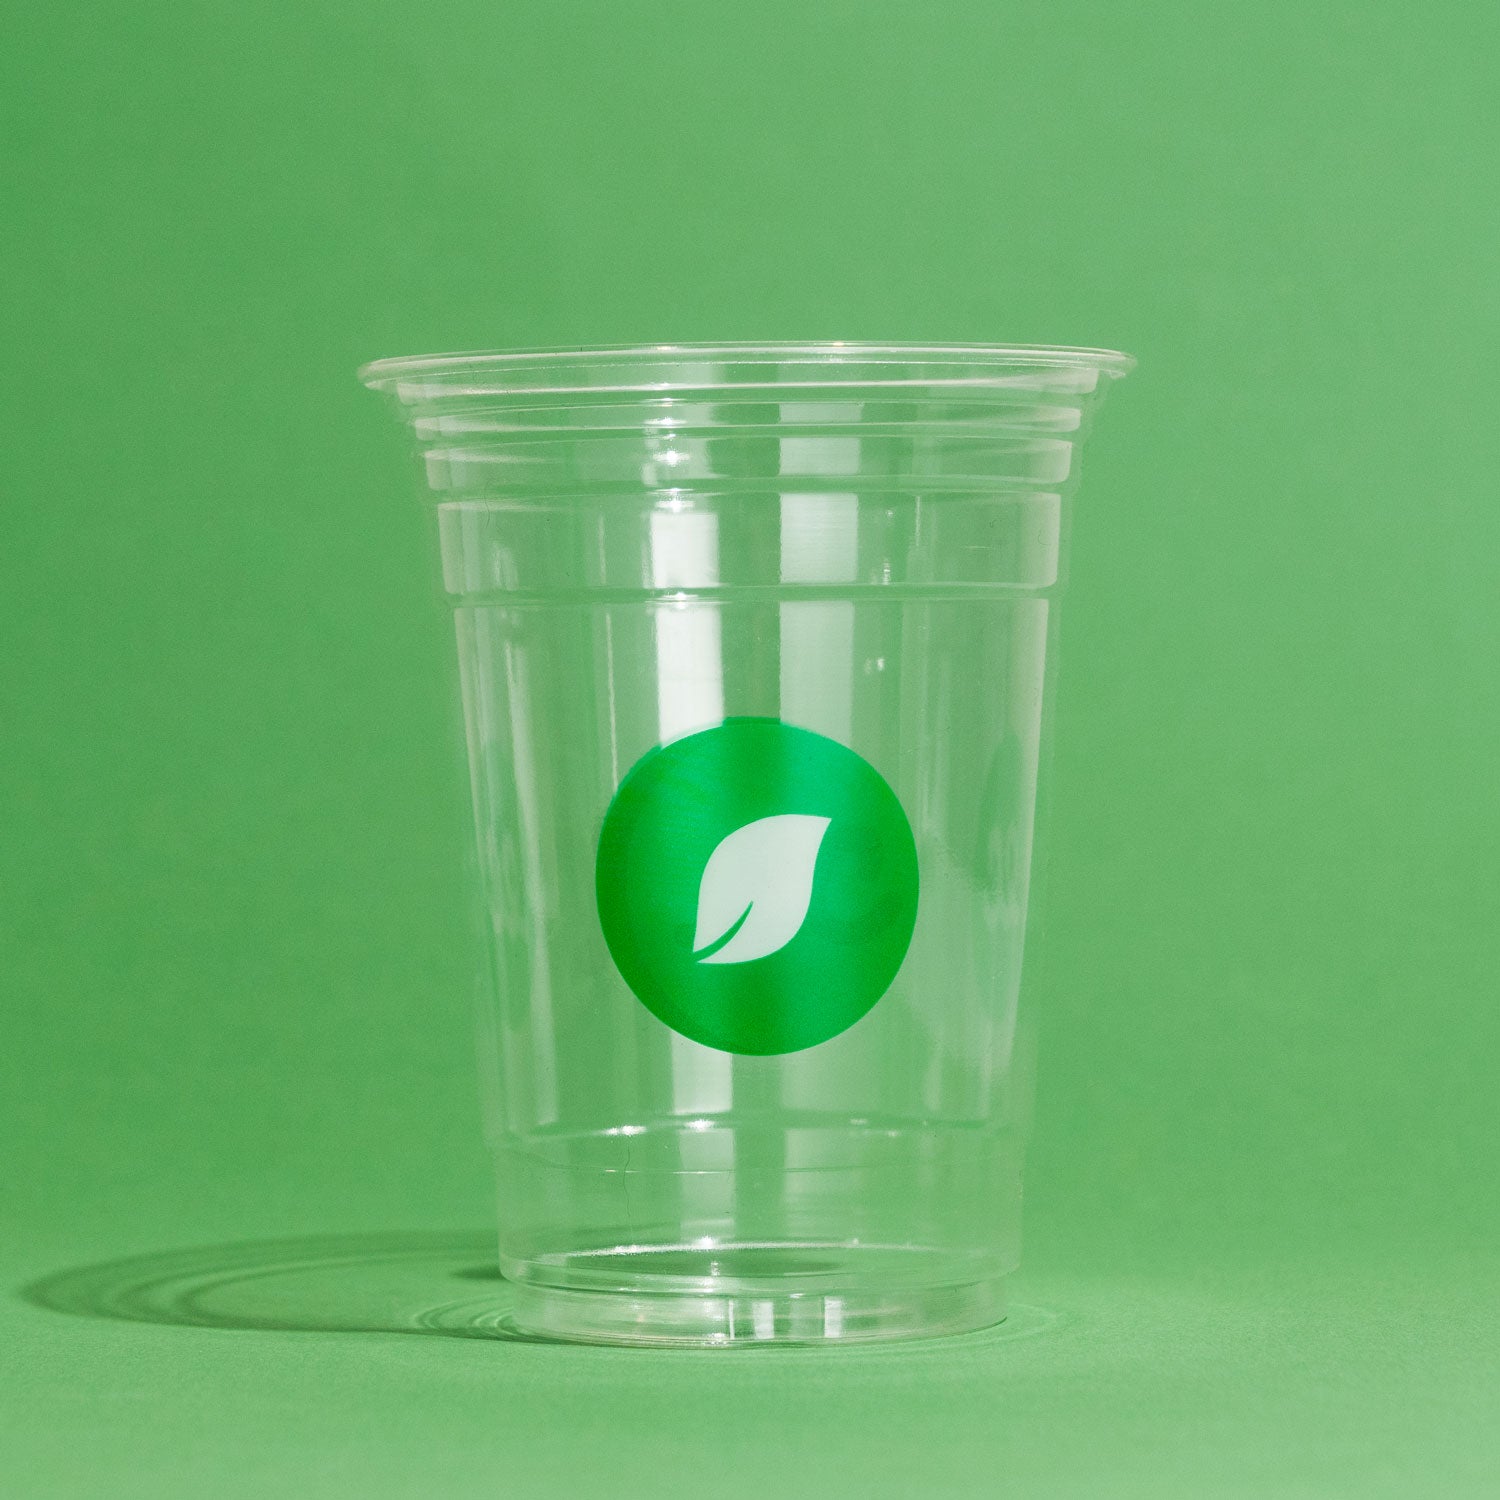 Earth Cups - Green – Earth Brands Inc